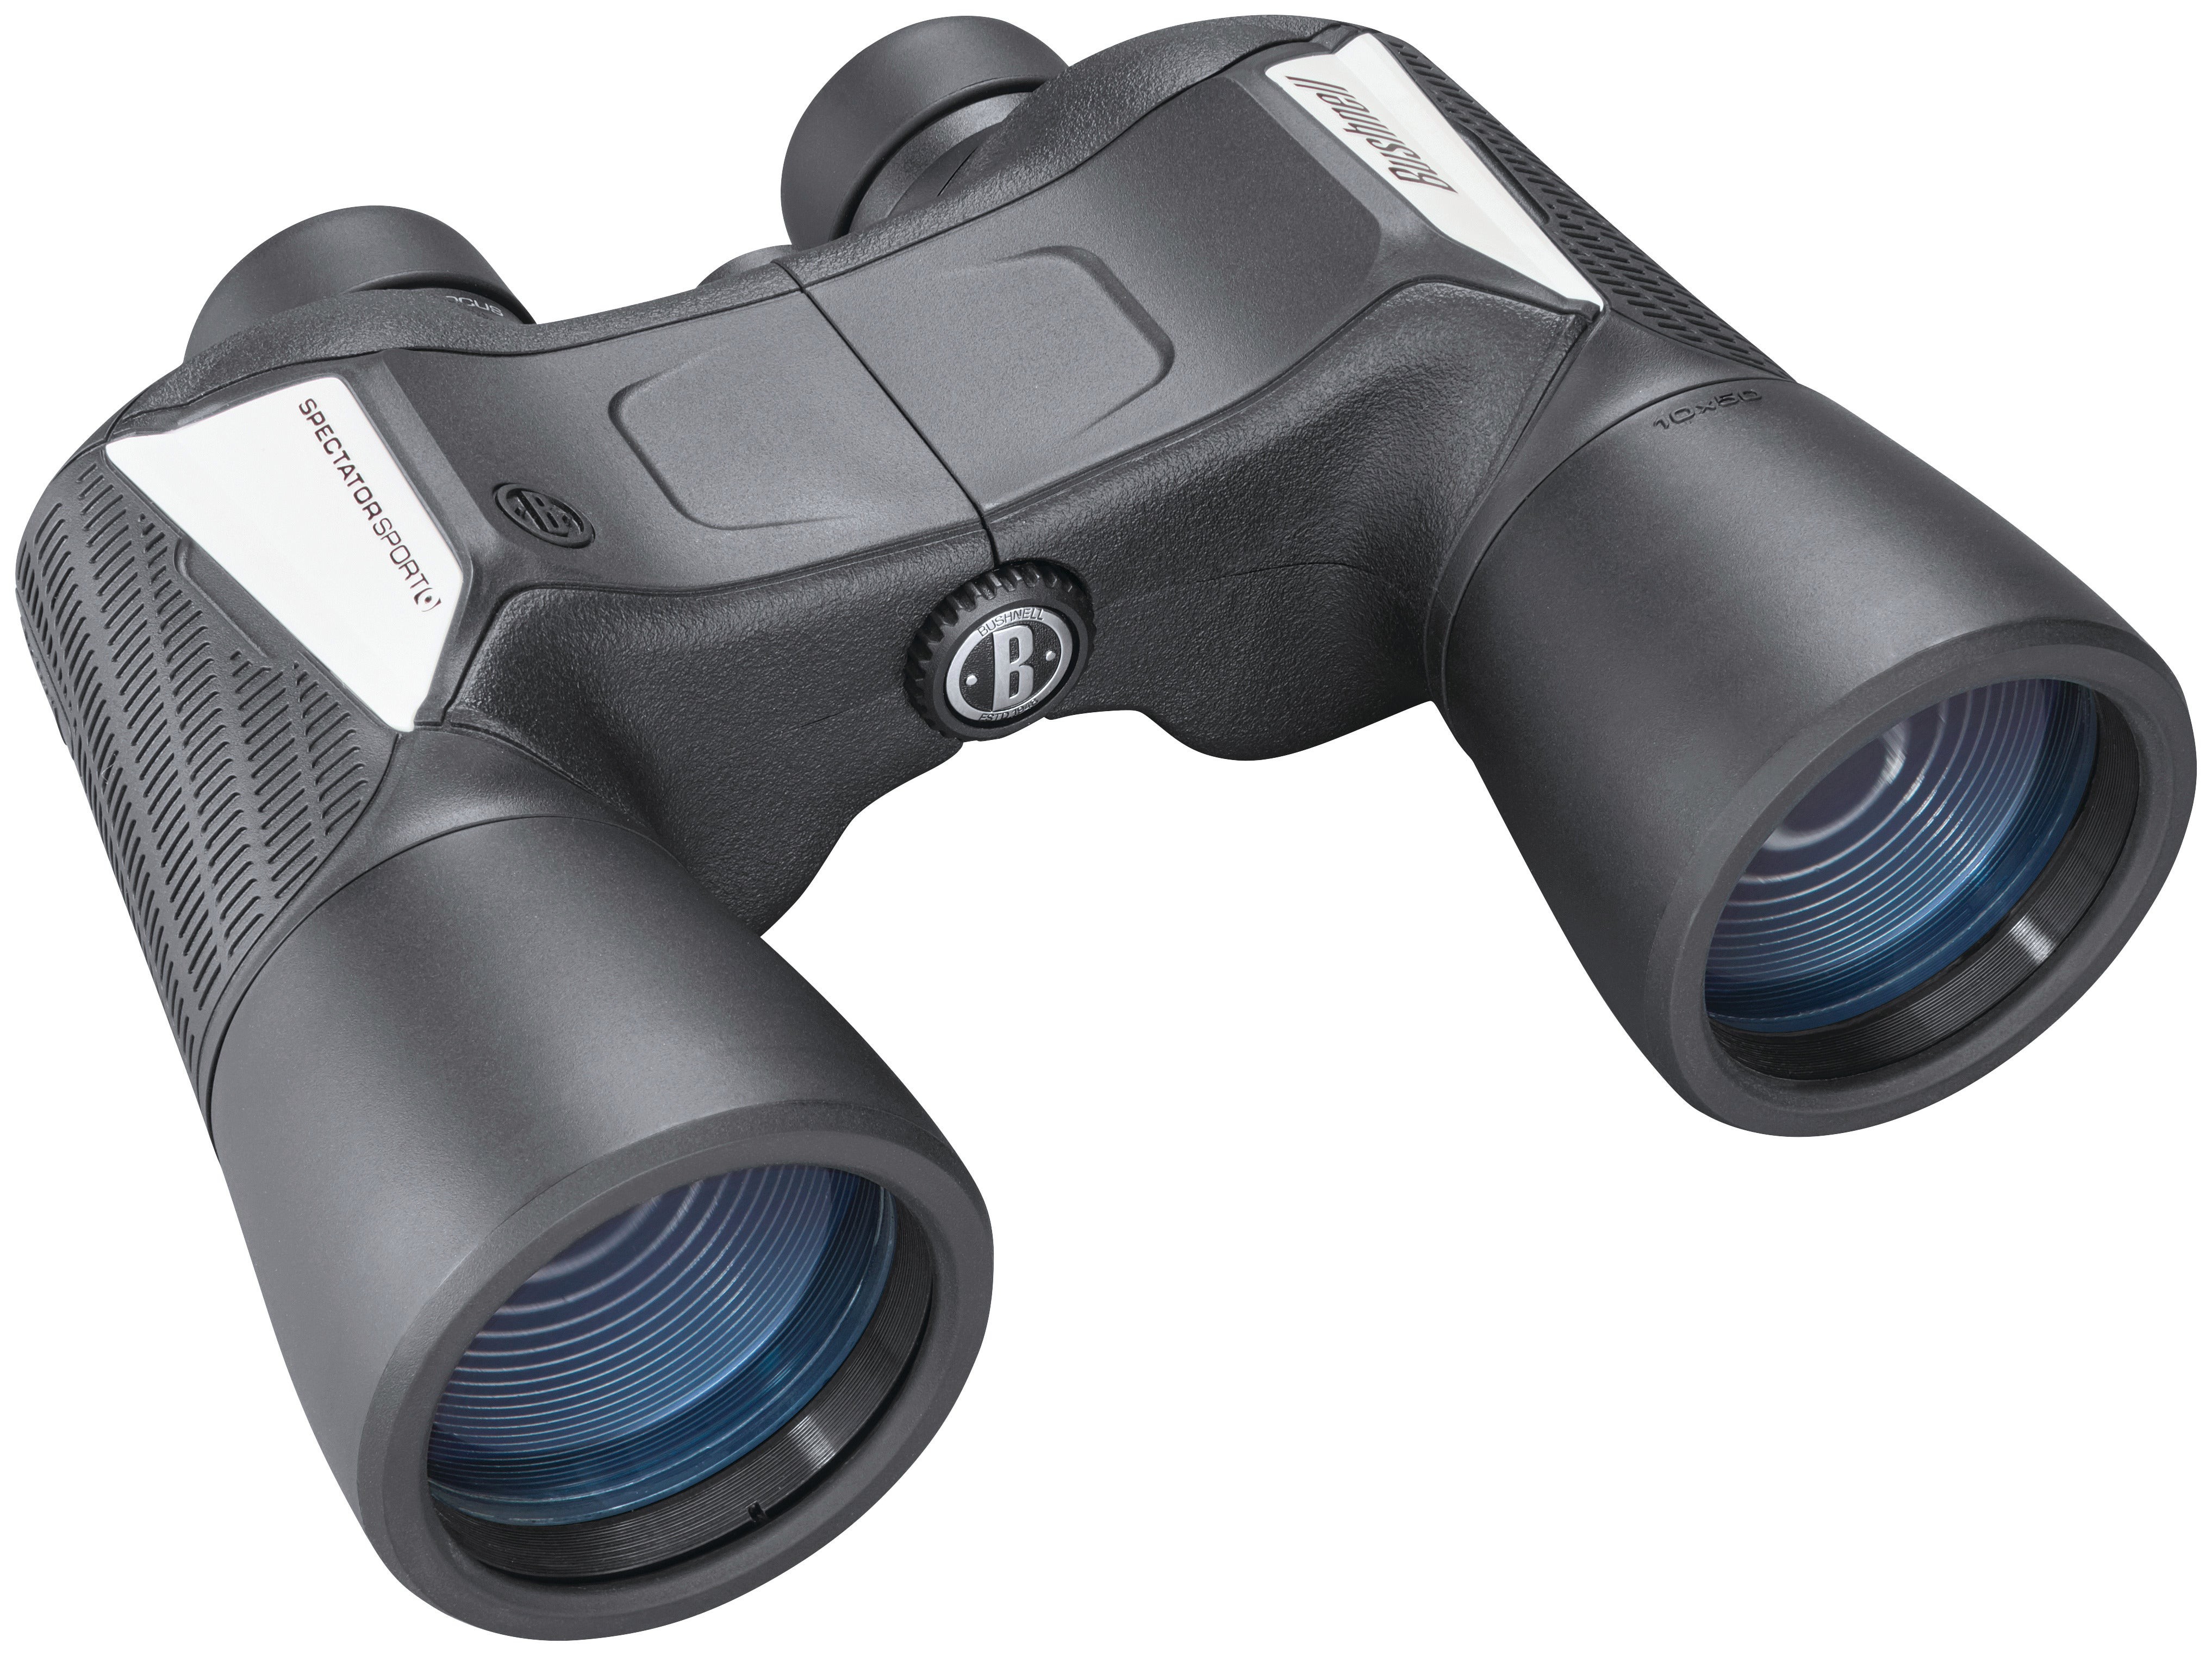 10x 50mm Spectator Sport Permafocus Binoculars